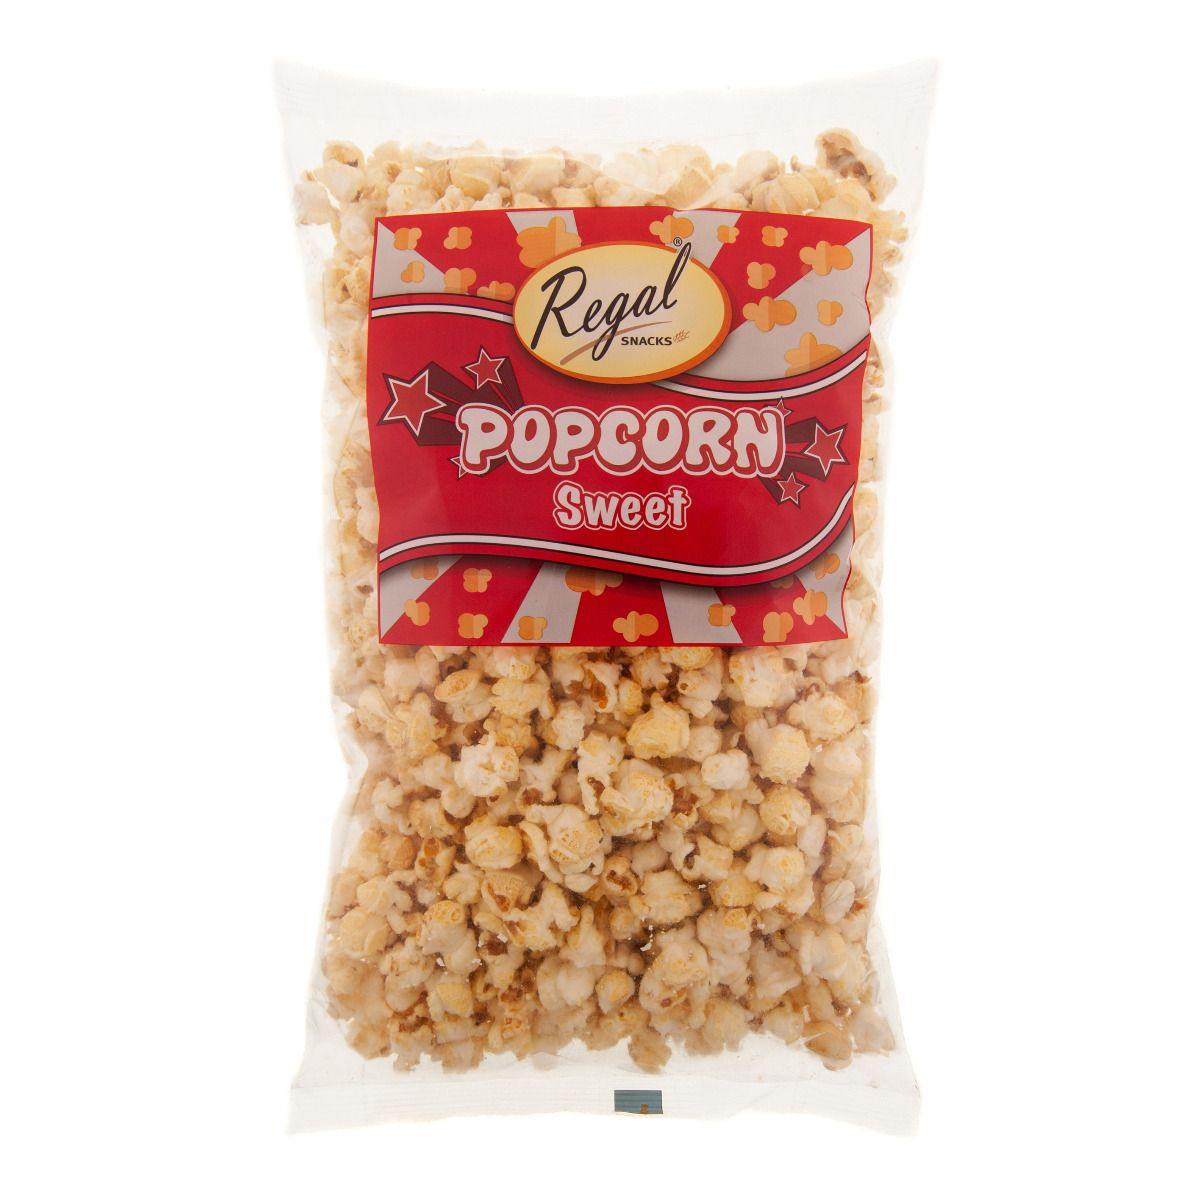 Regal Sweet popcorn SaveCo Online Ltd